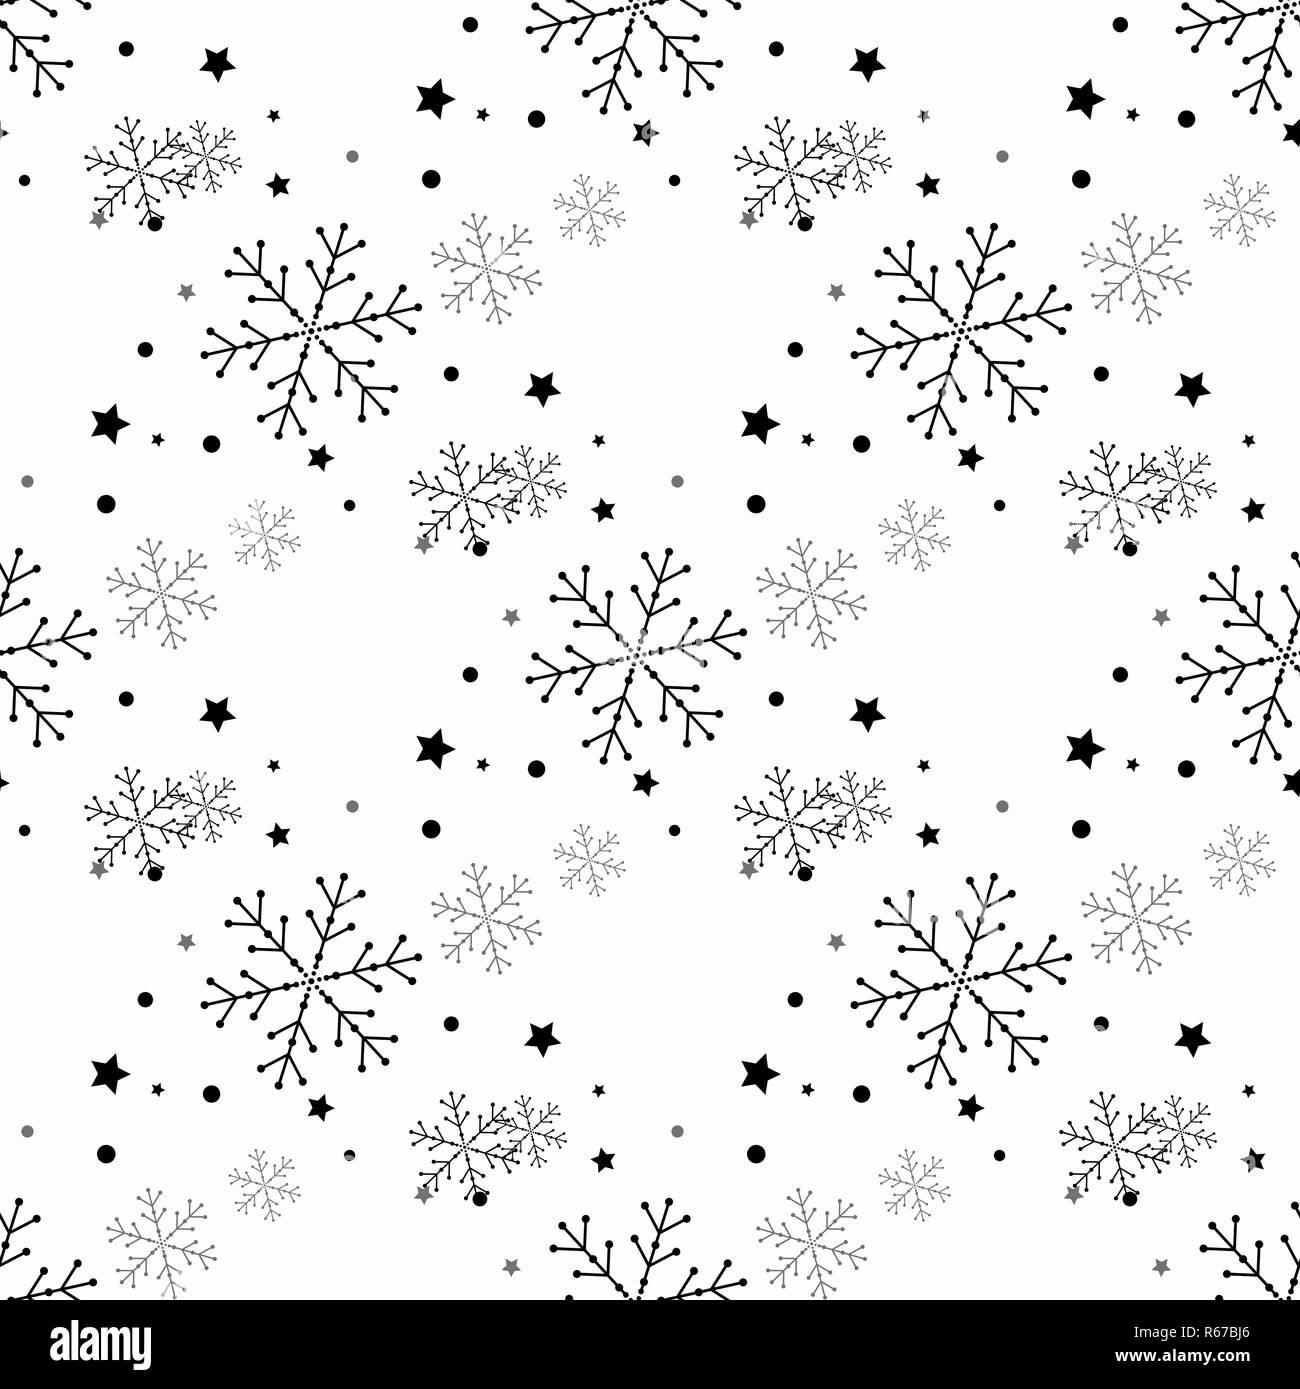 Snowflake simple seamless pattern Black snow on white background